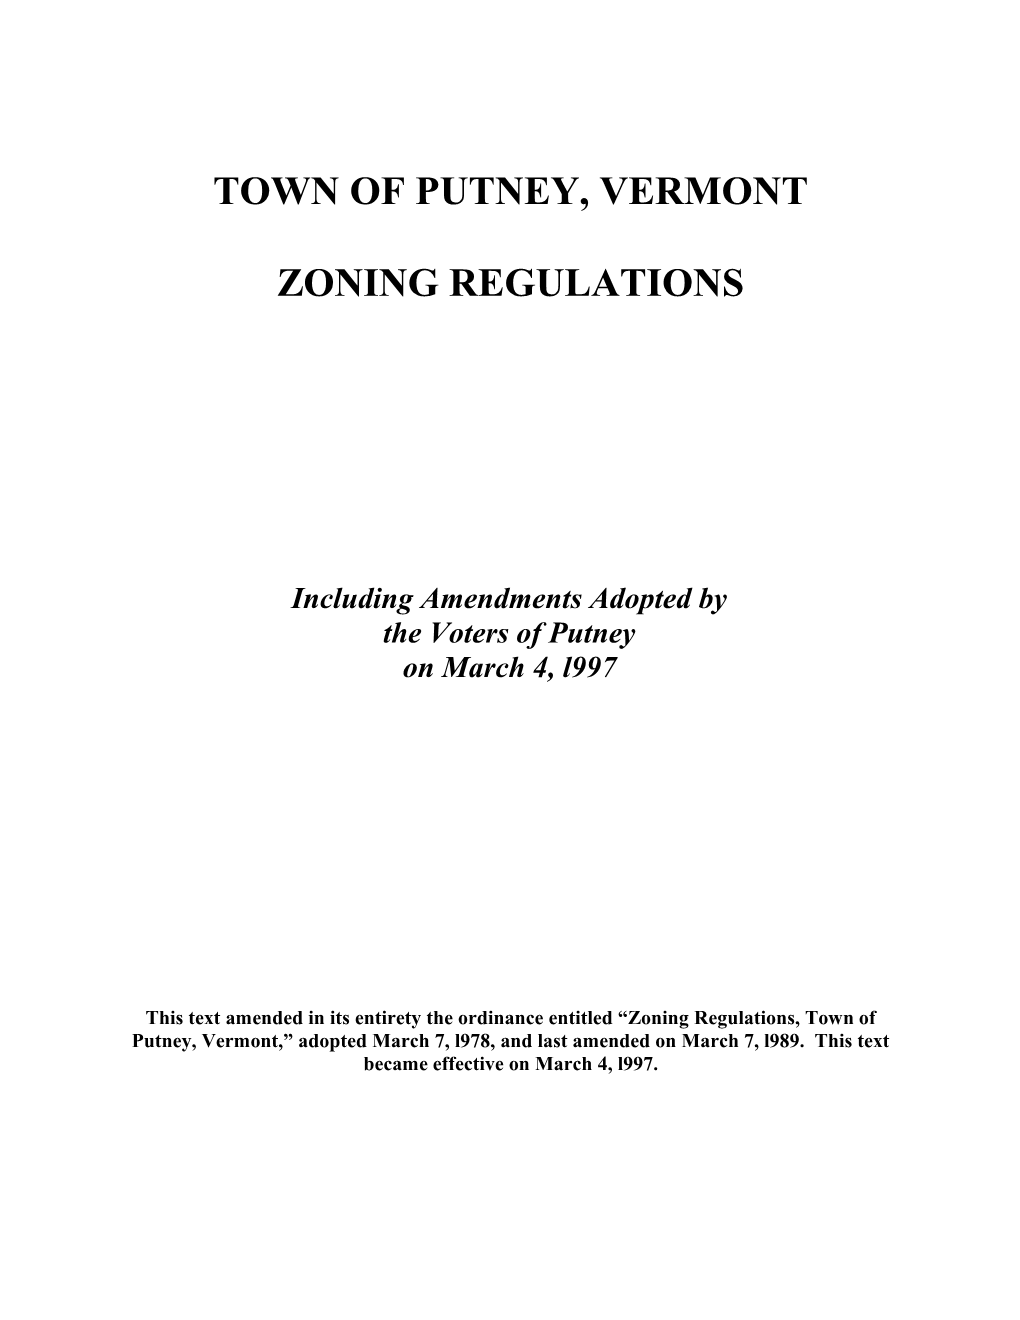 Town of Putney, Vermont